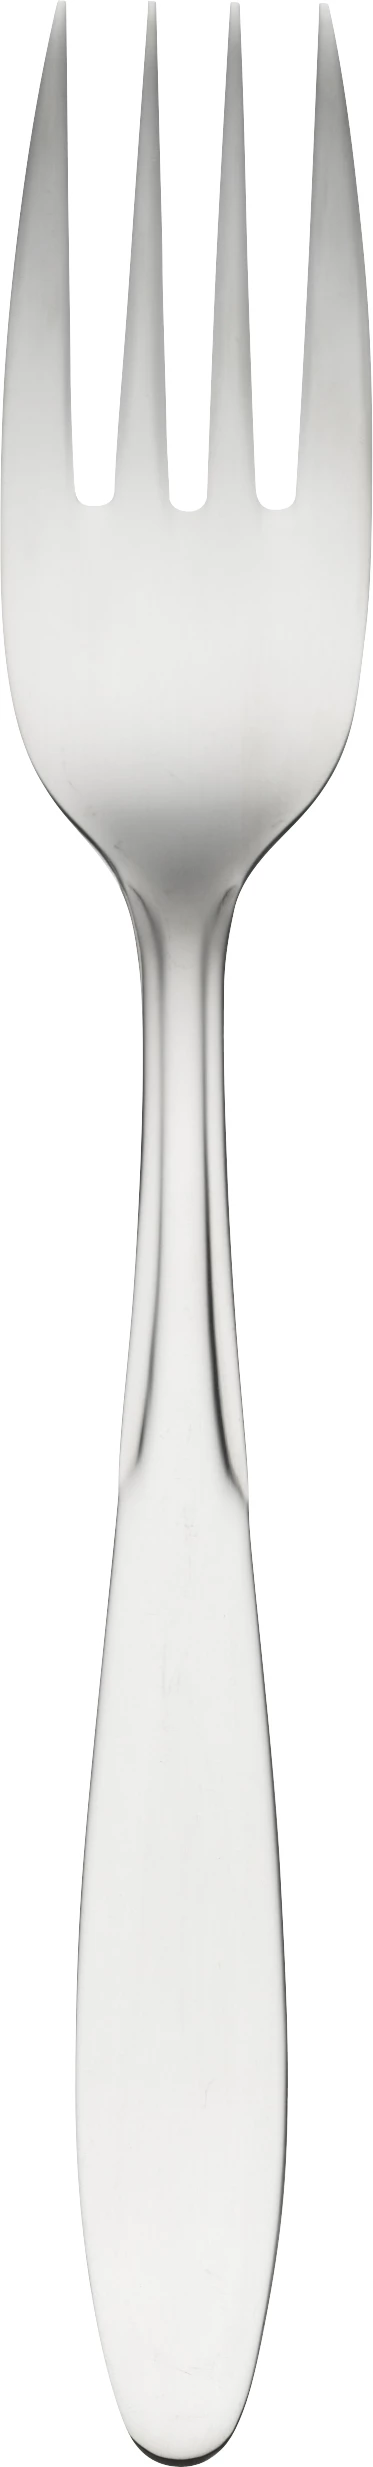 Arabella spisegaffel, 19,5 cm